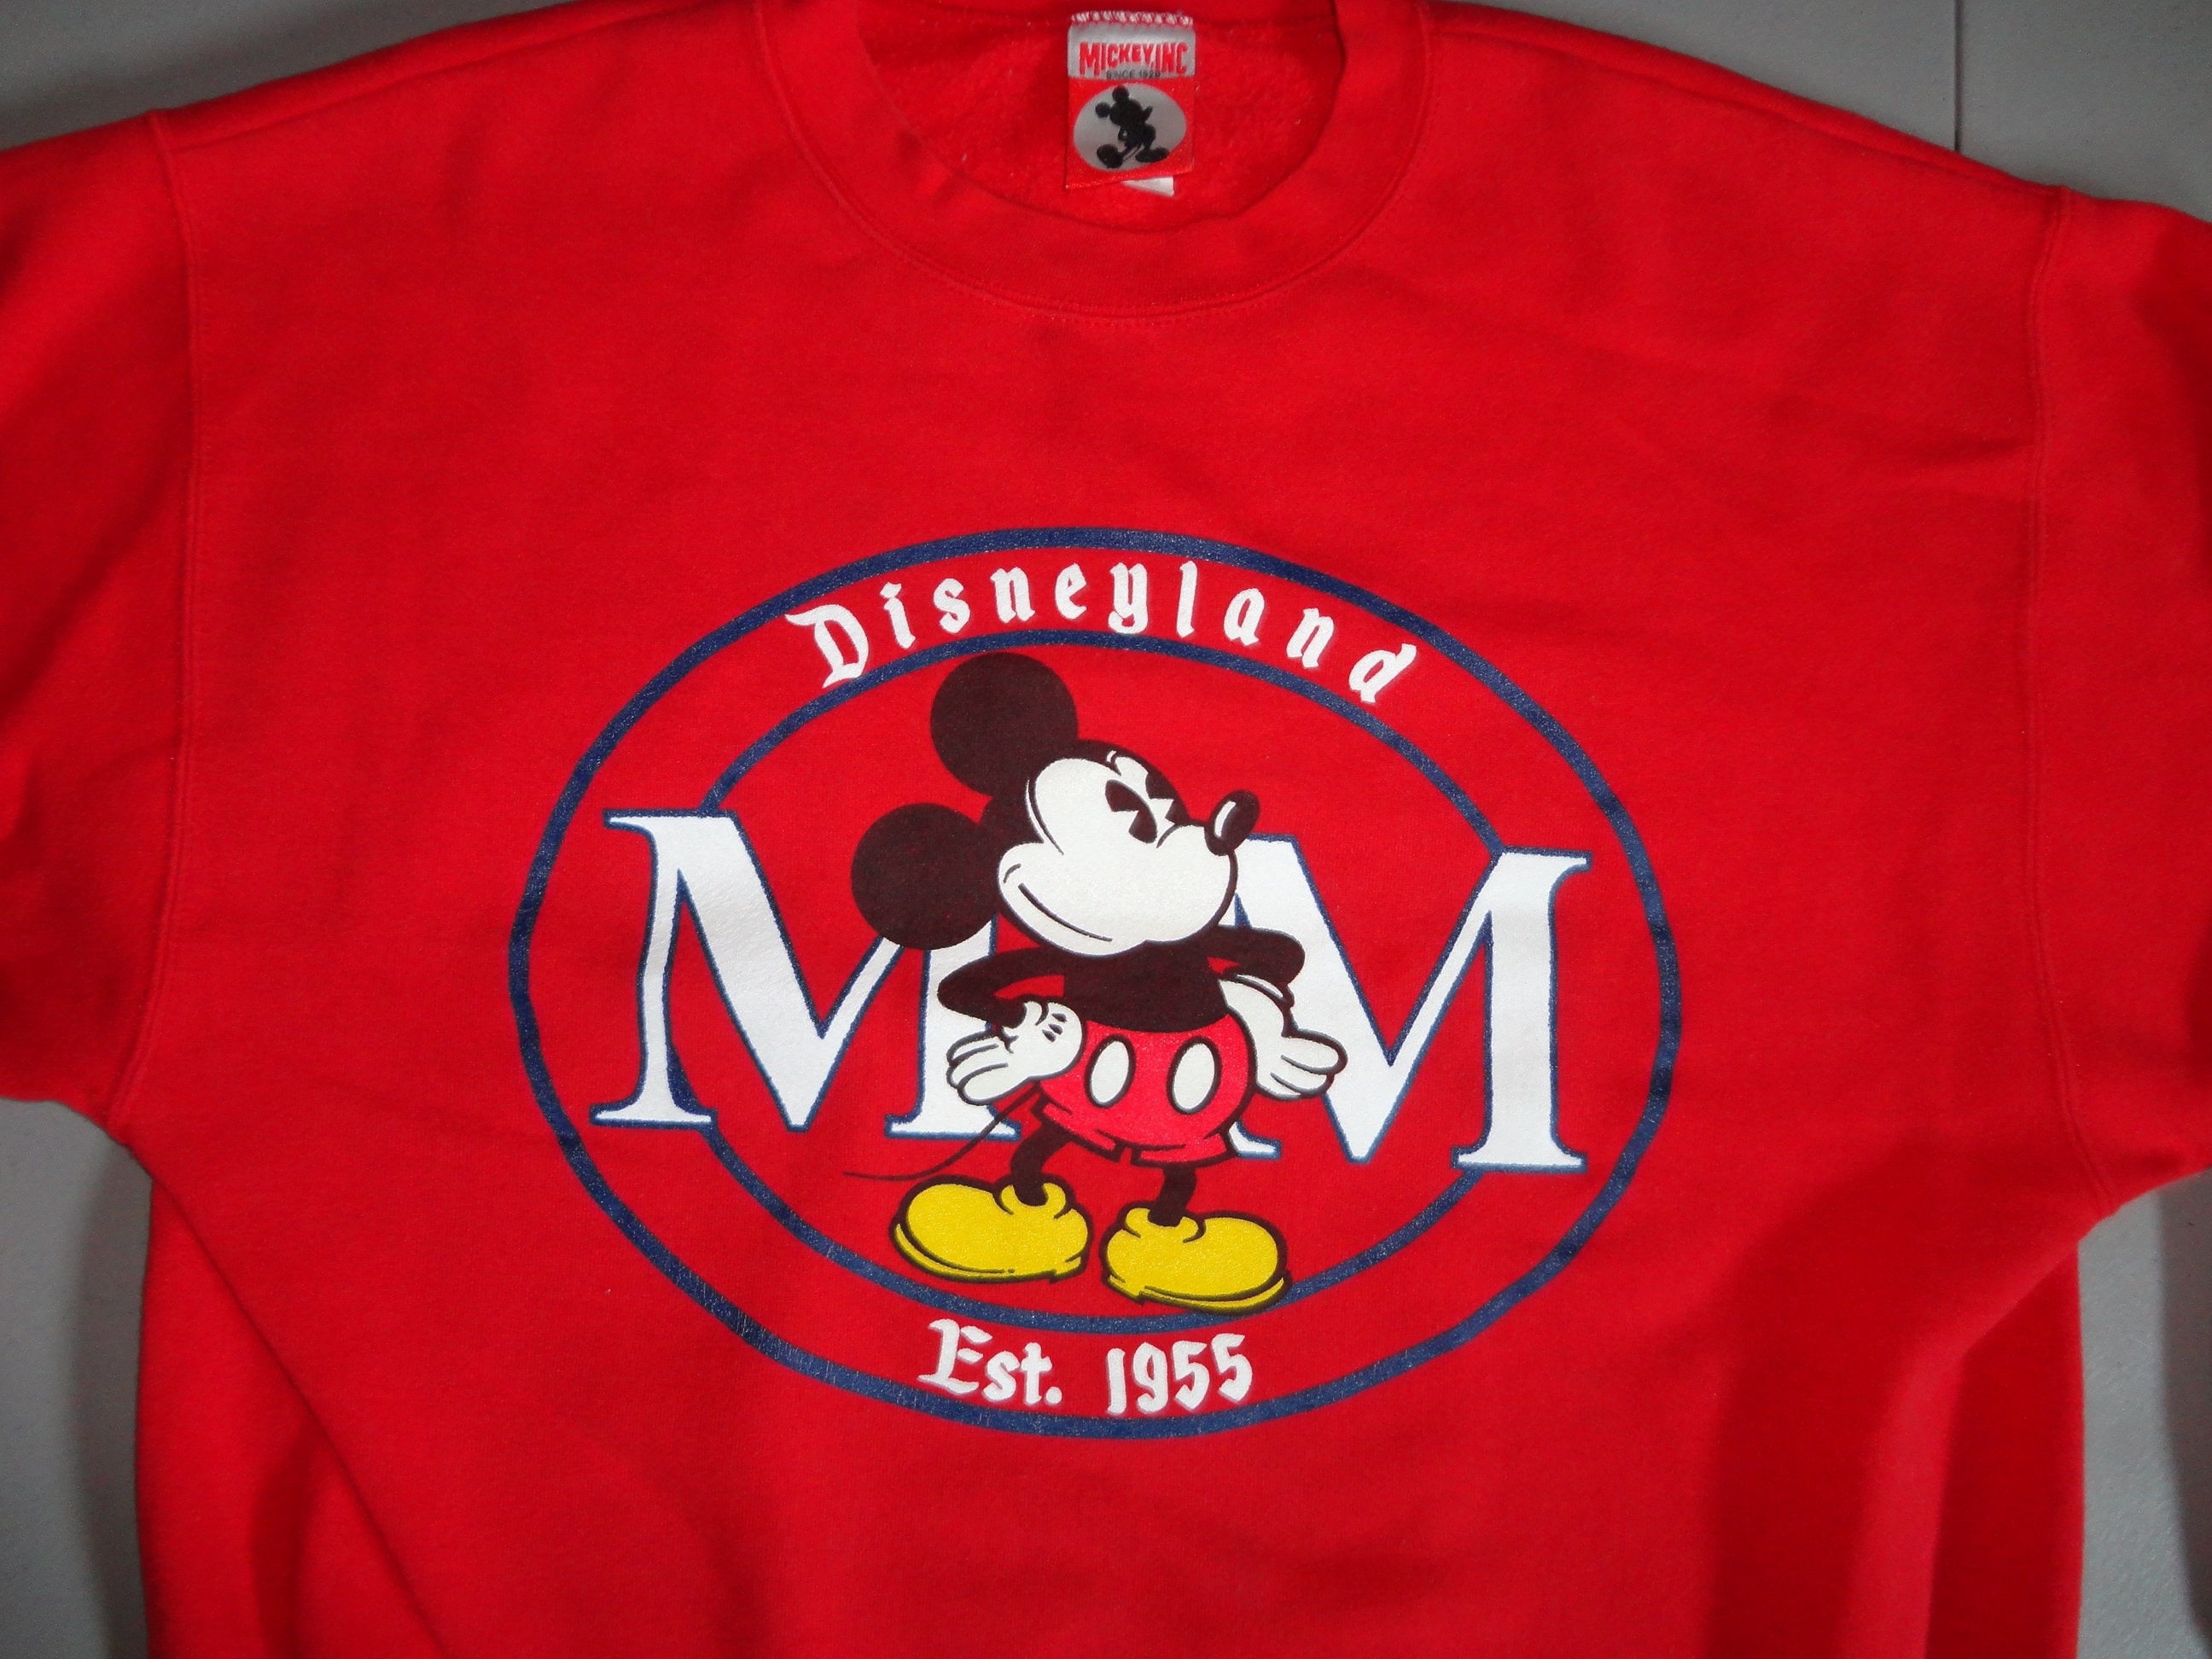 NHL New York Rangers Mickey Mouse Disney Hockey T Shirt Youth Sweatshirt